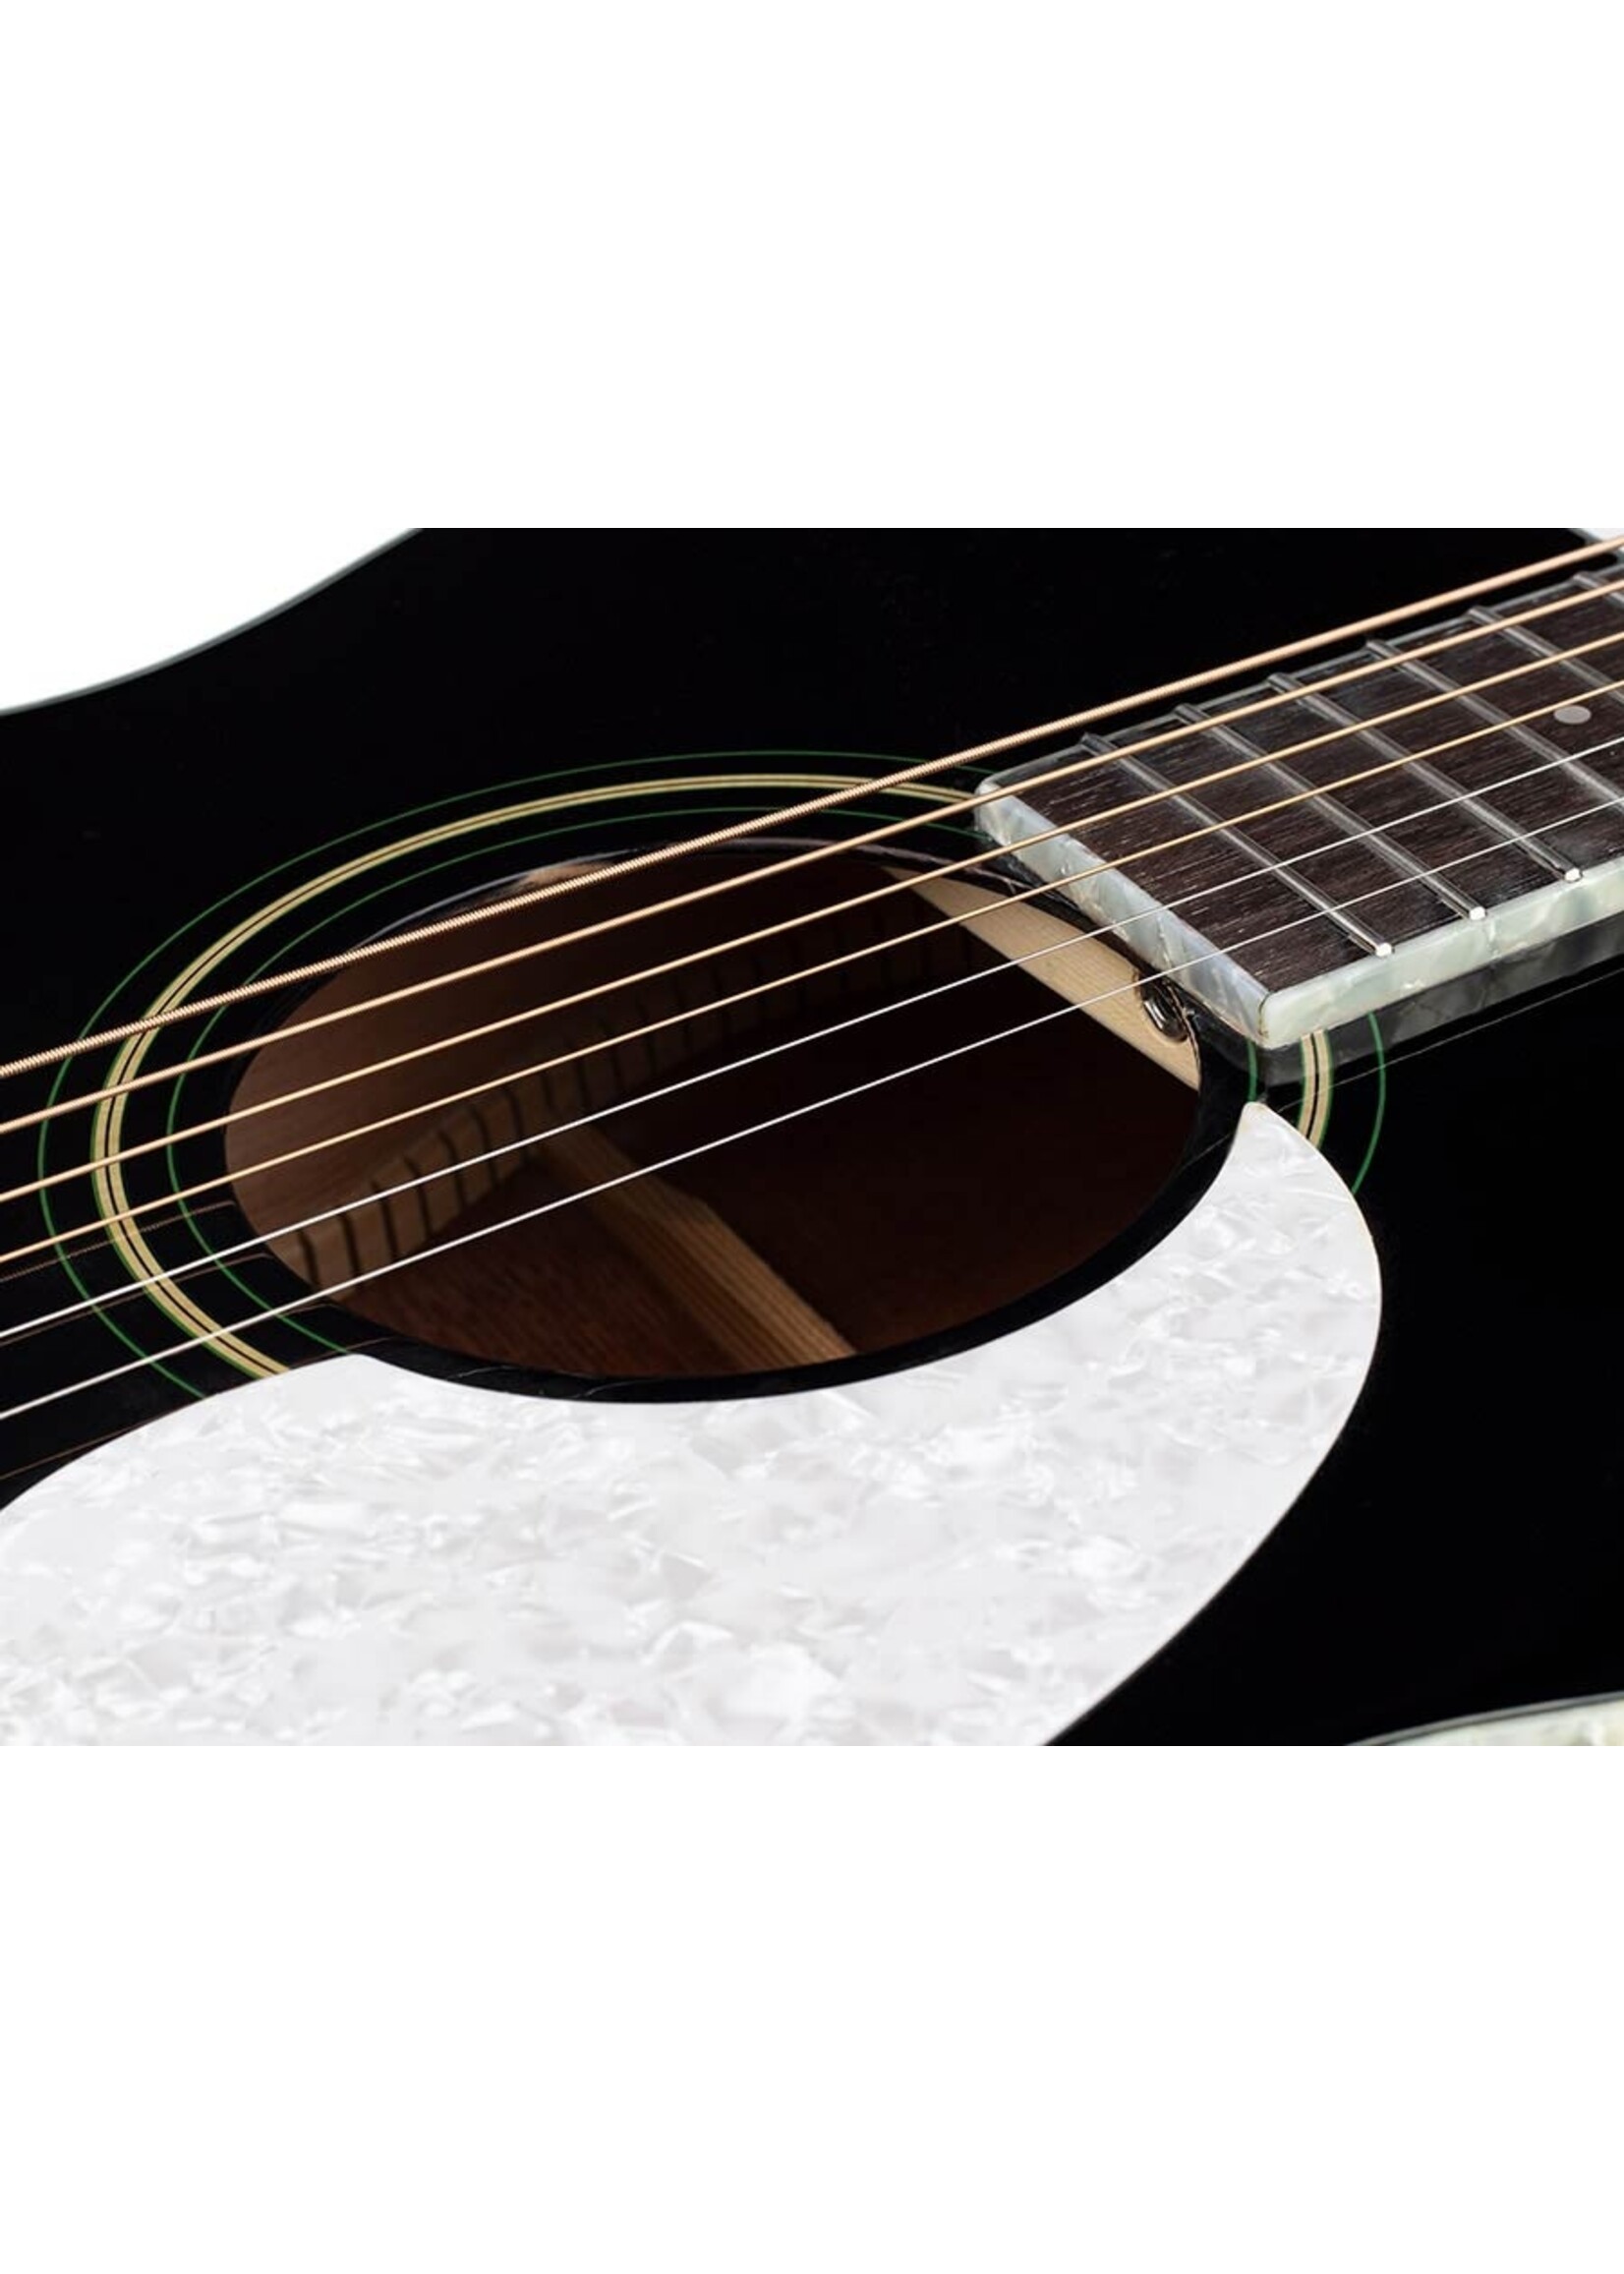 Richwood Richwood HSA-55-BK Richwood Heritage Series auditorium guitar with solid spruce top, Black